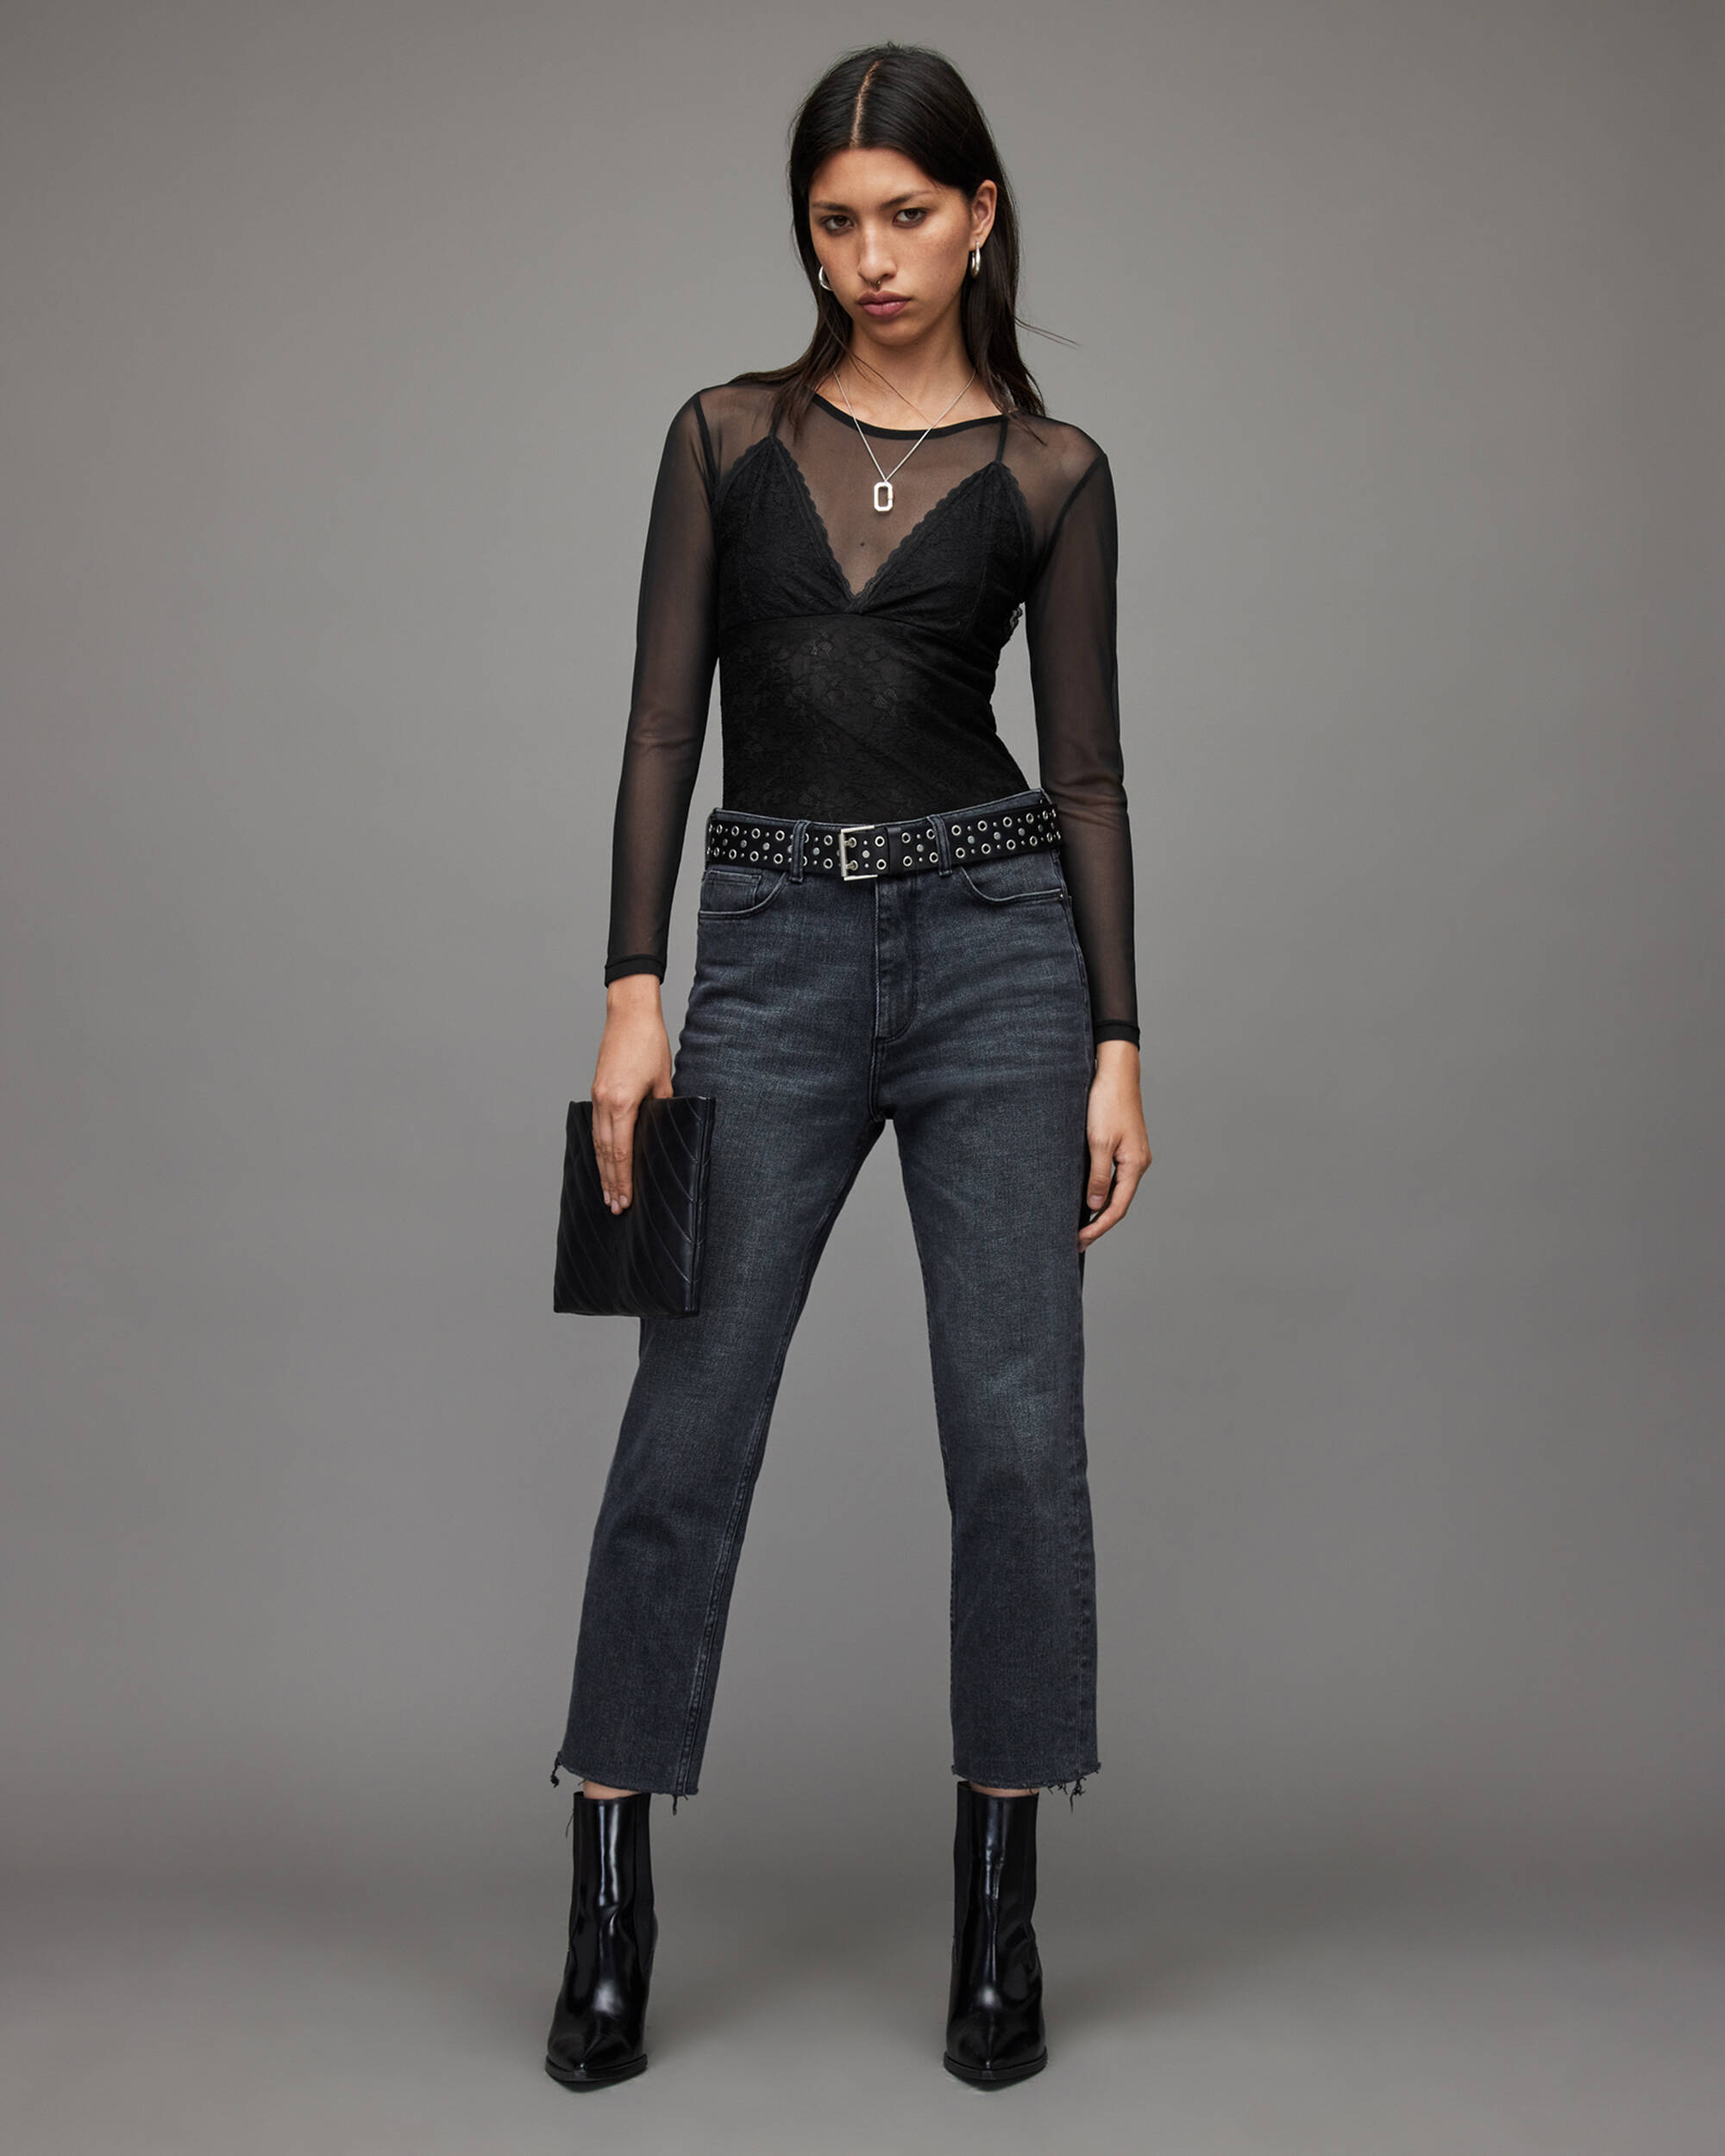 Nyla Lace Bodysuit Black | ALLSAINTS US